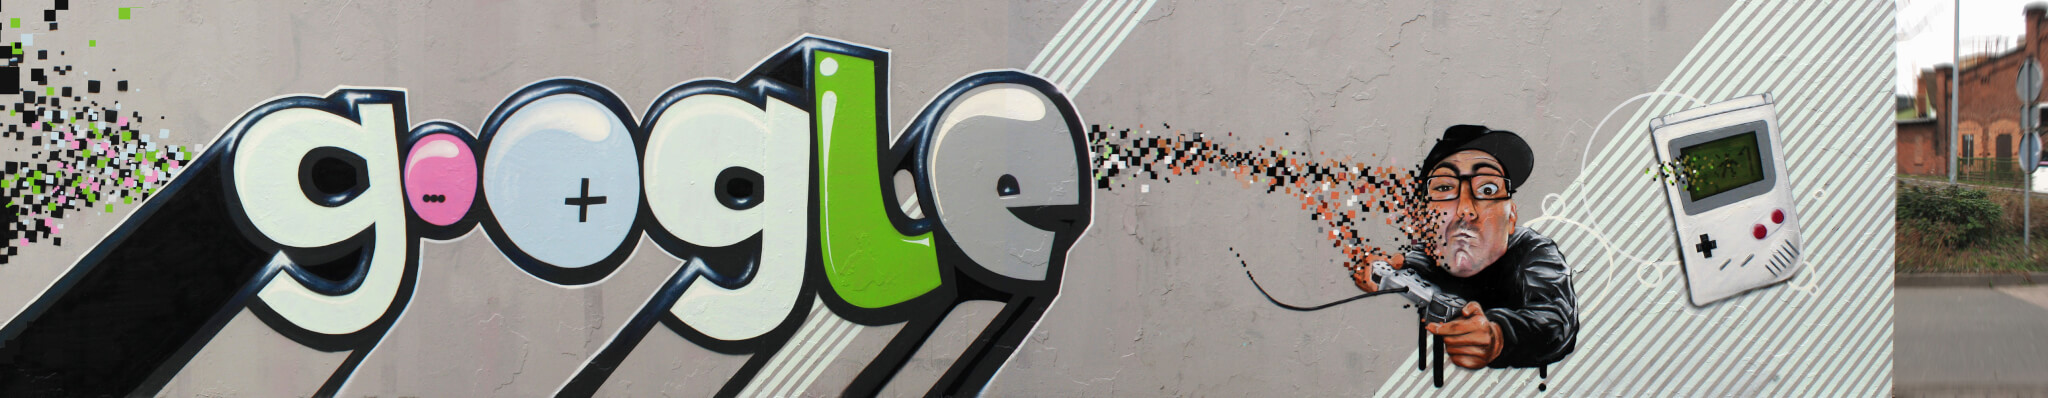 google Graffiti - Max Kosta 2011